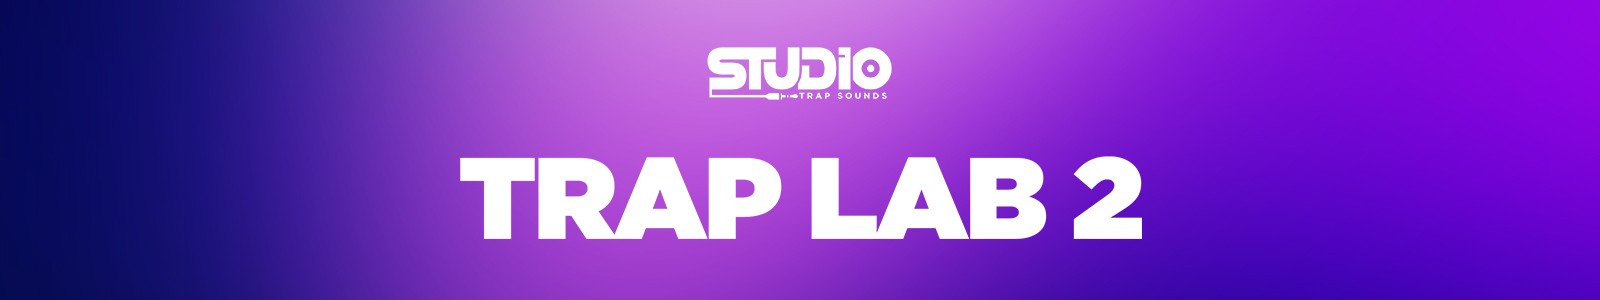 Trap Lab 2 by Studio Trap Sounds